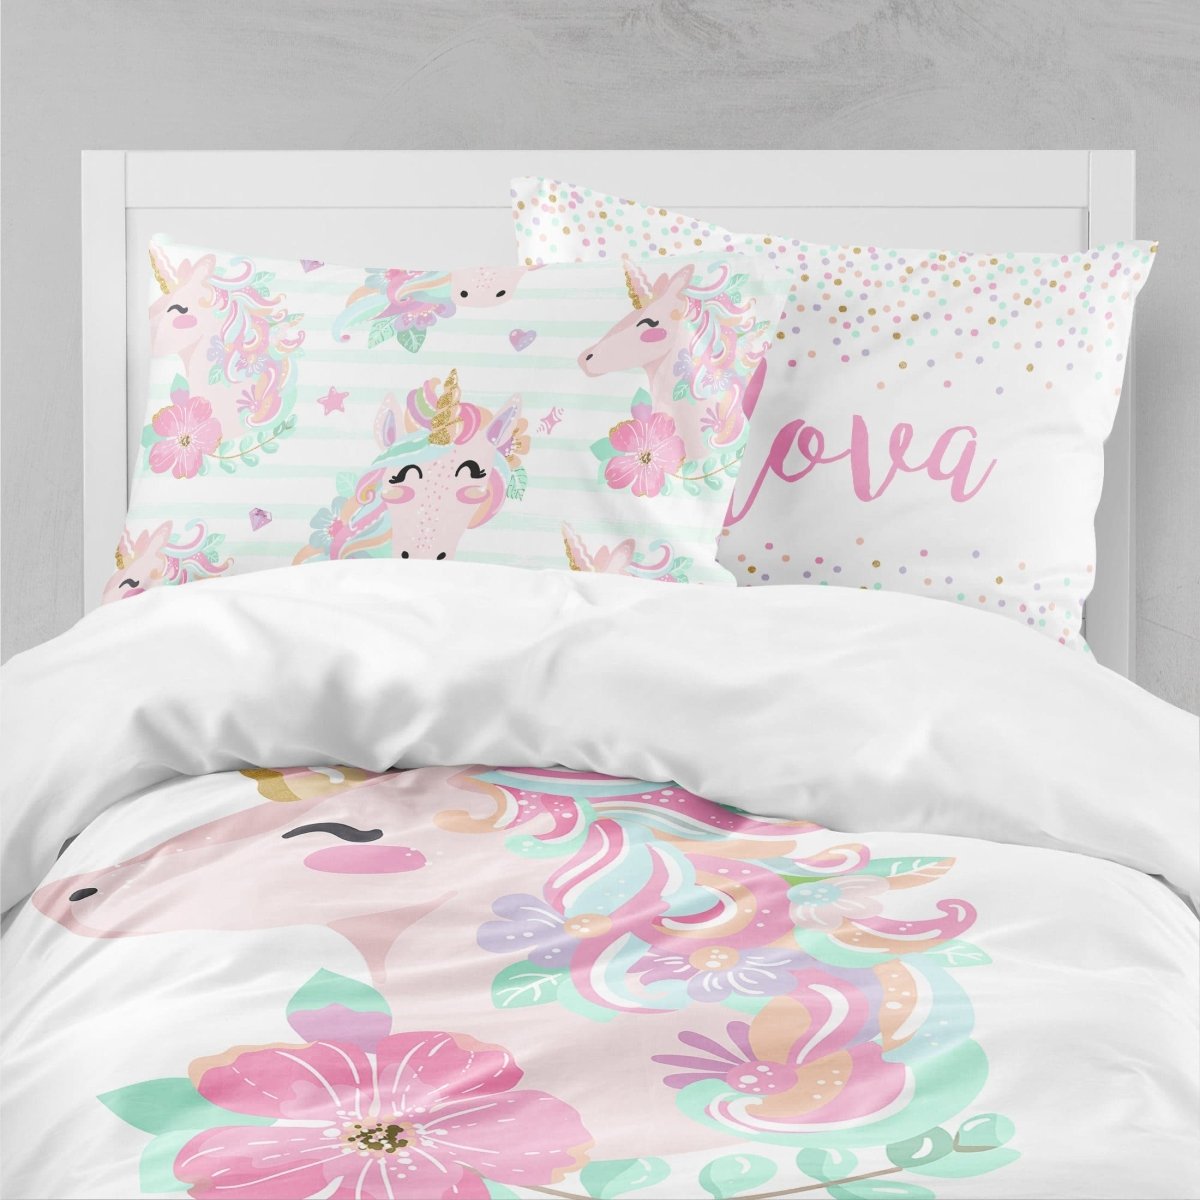 Unicorn Kids Bedding Set (Comforter or Duvet Cover) - text, Unicorn Dreams,